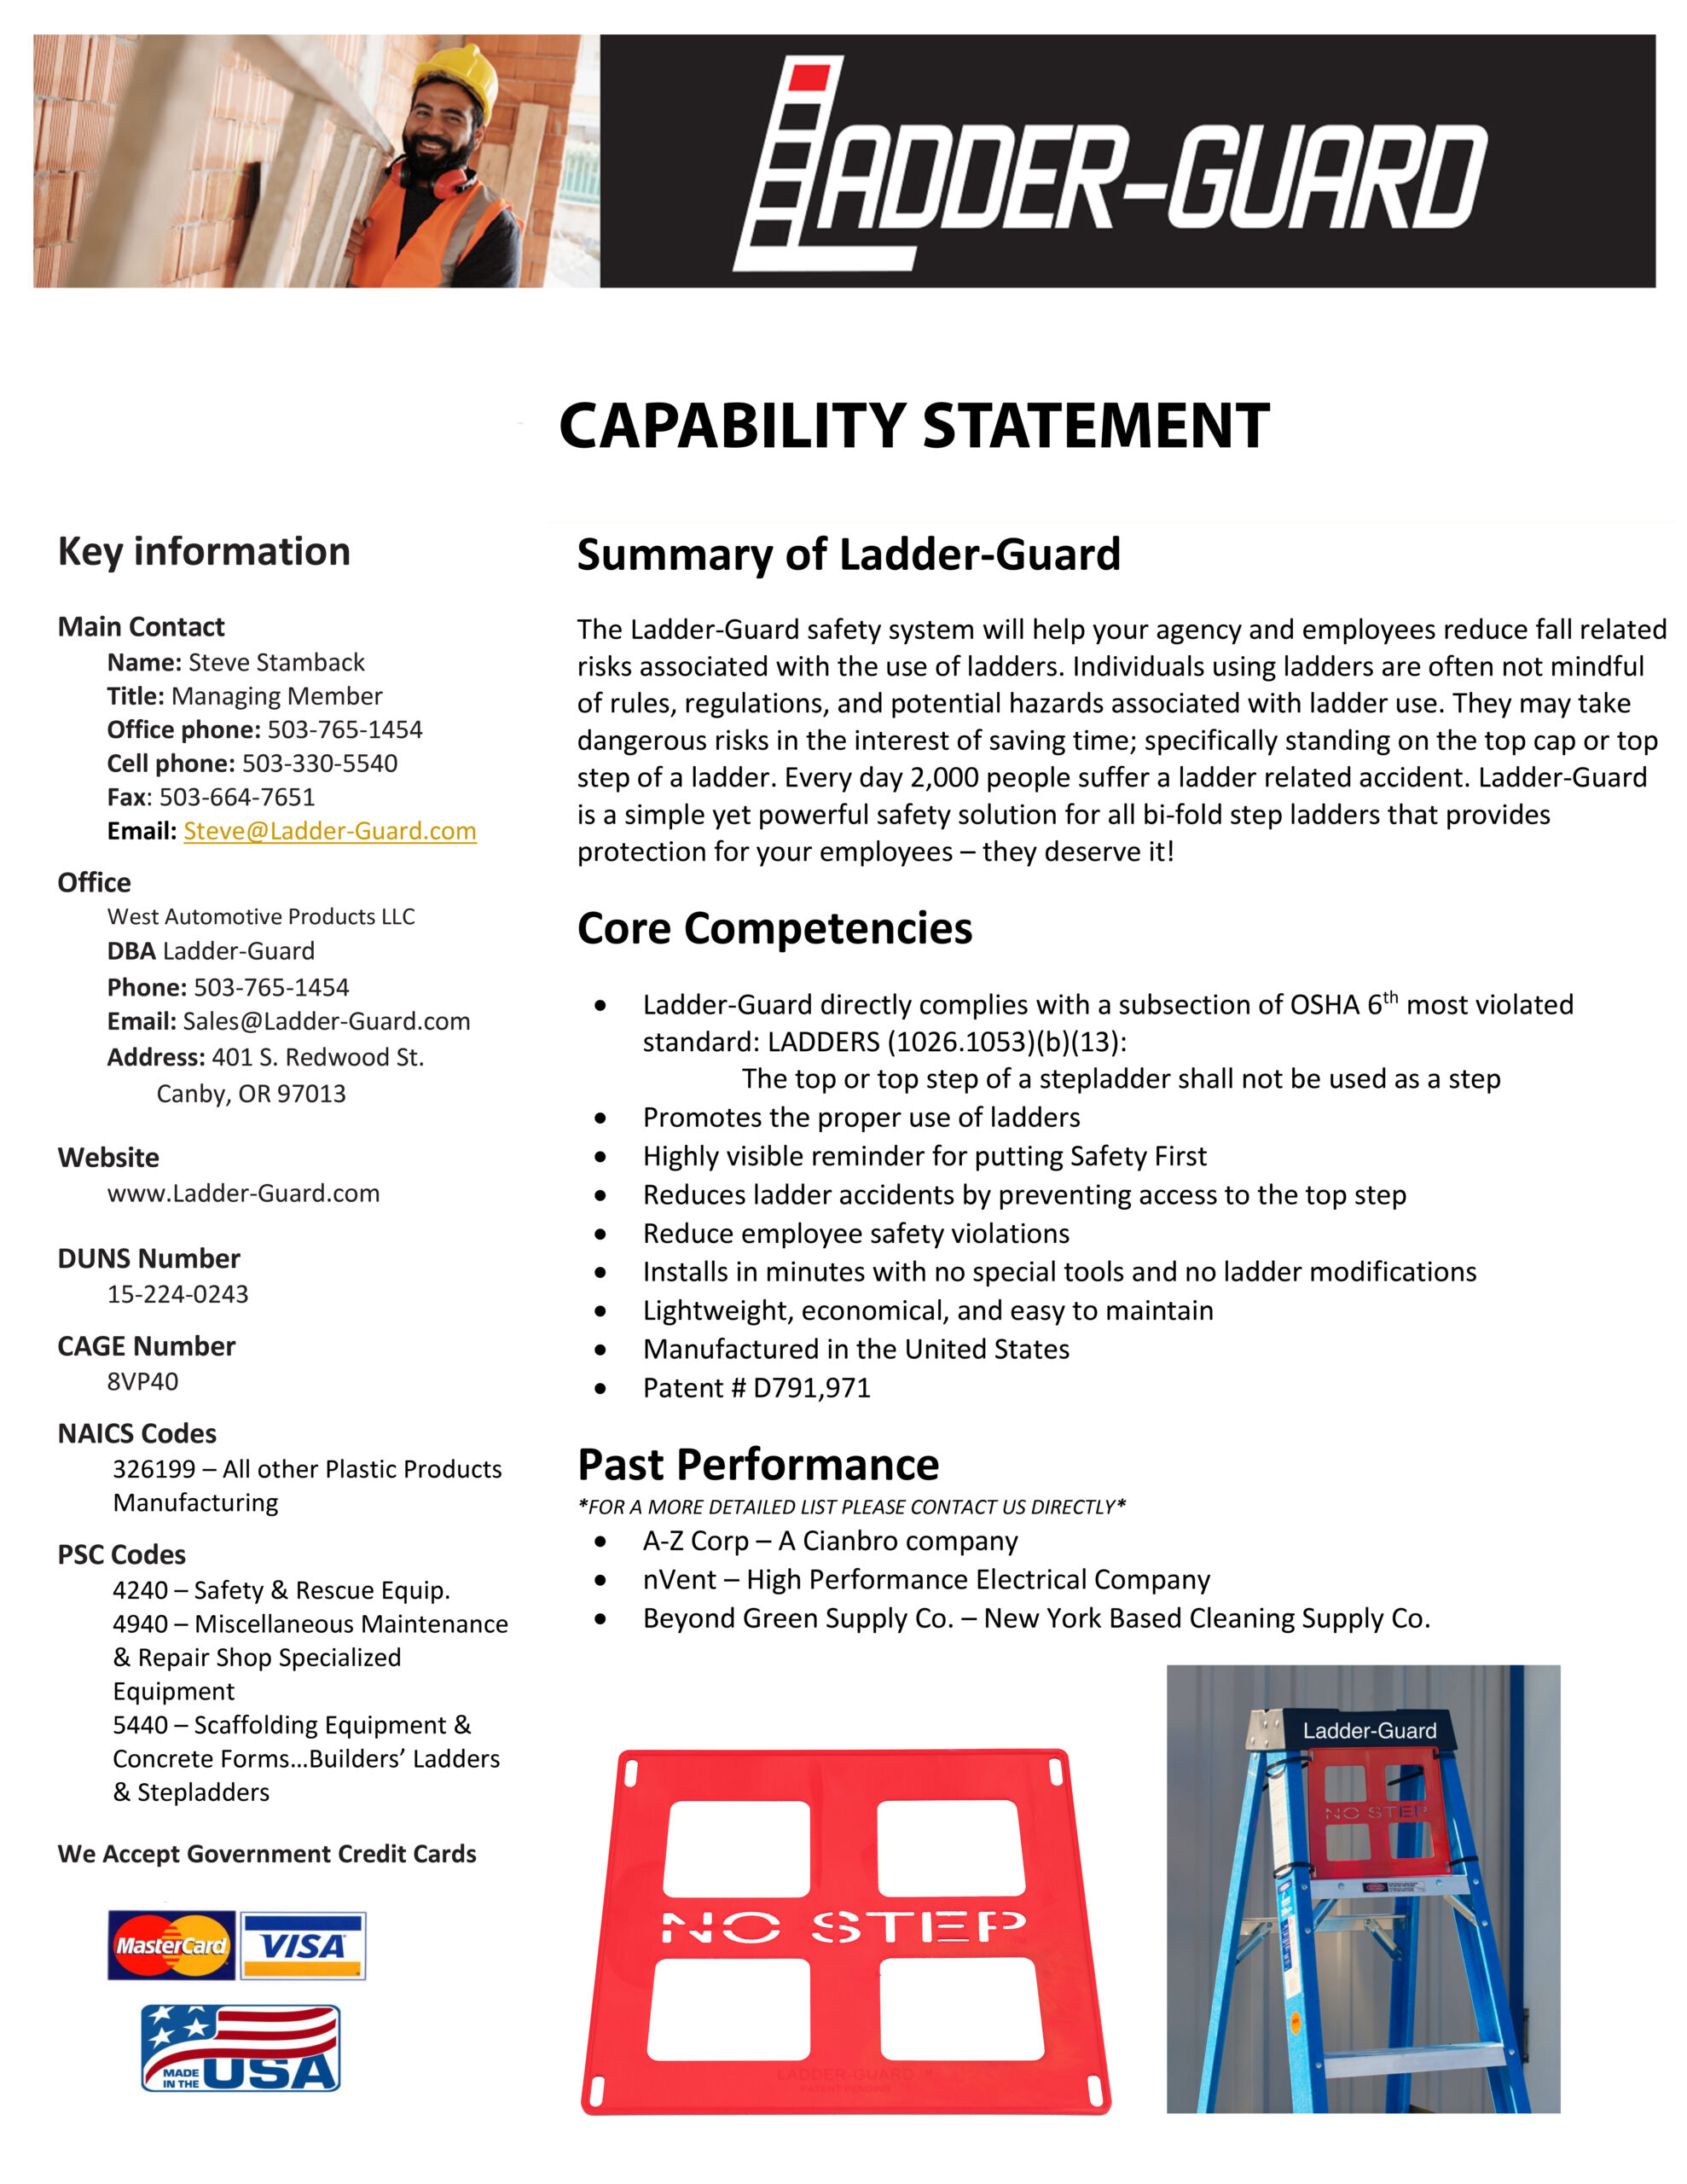 Ladder-Guard Capability Statement